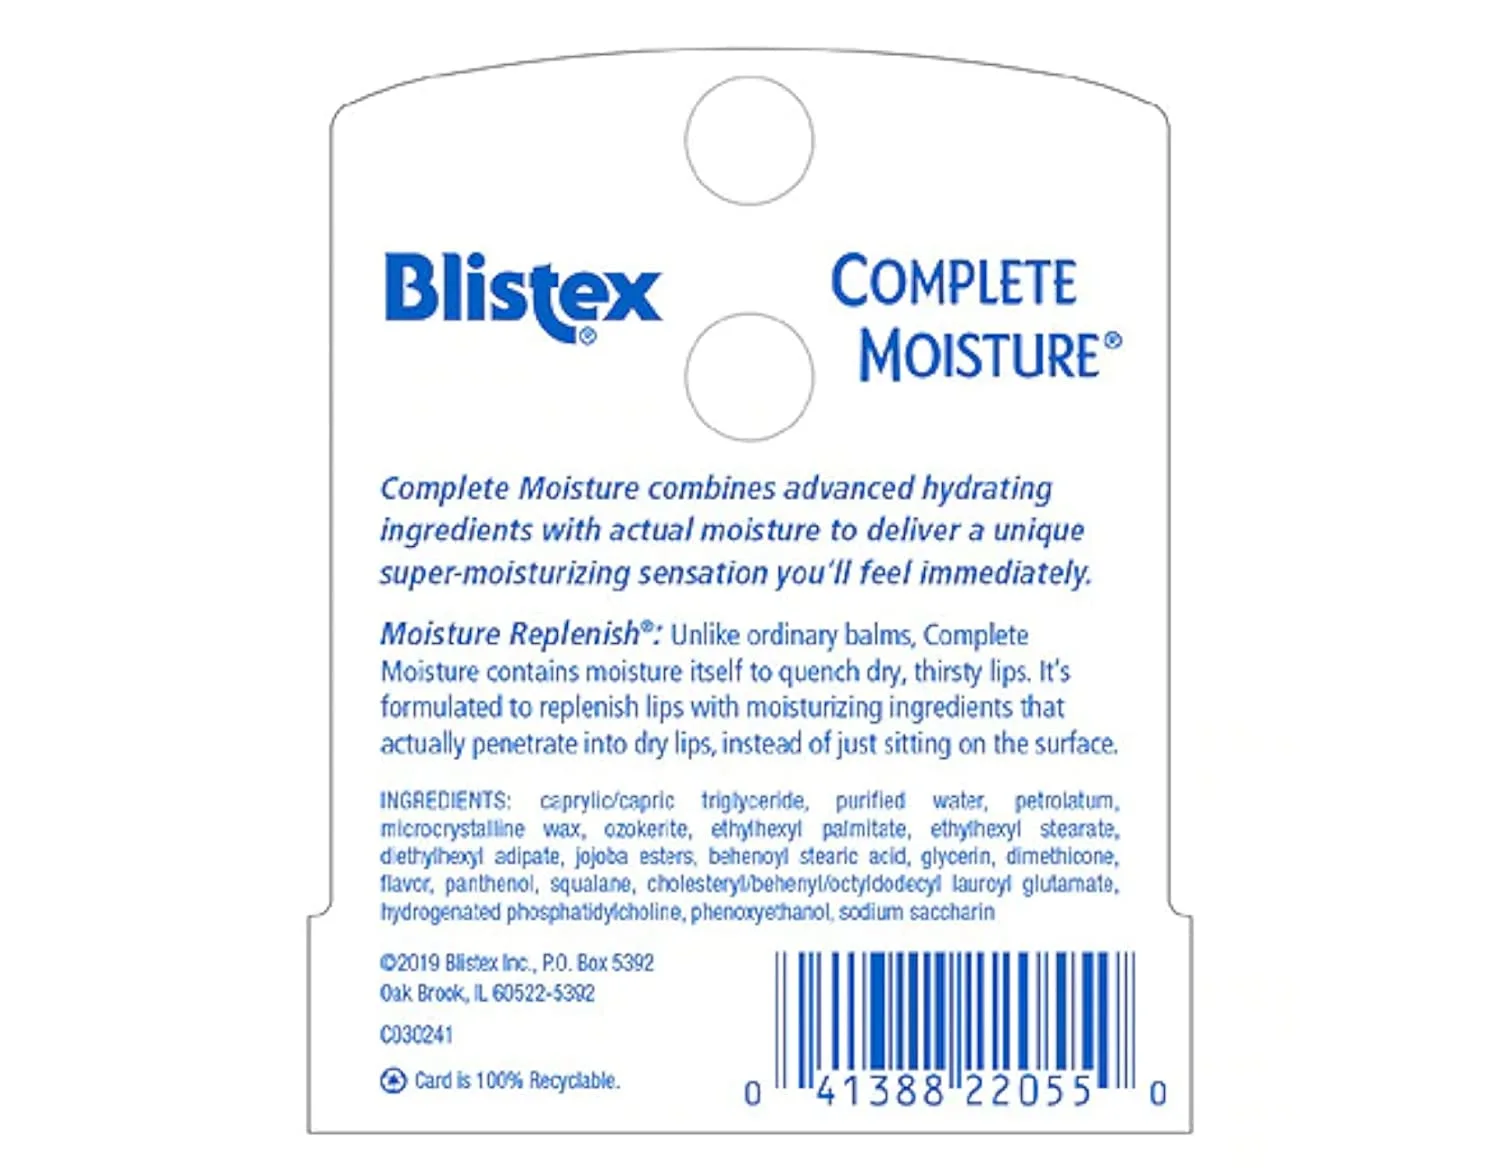 Blistex Complete Moisture ingredients